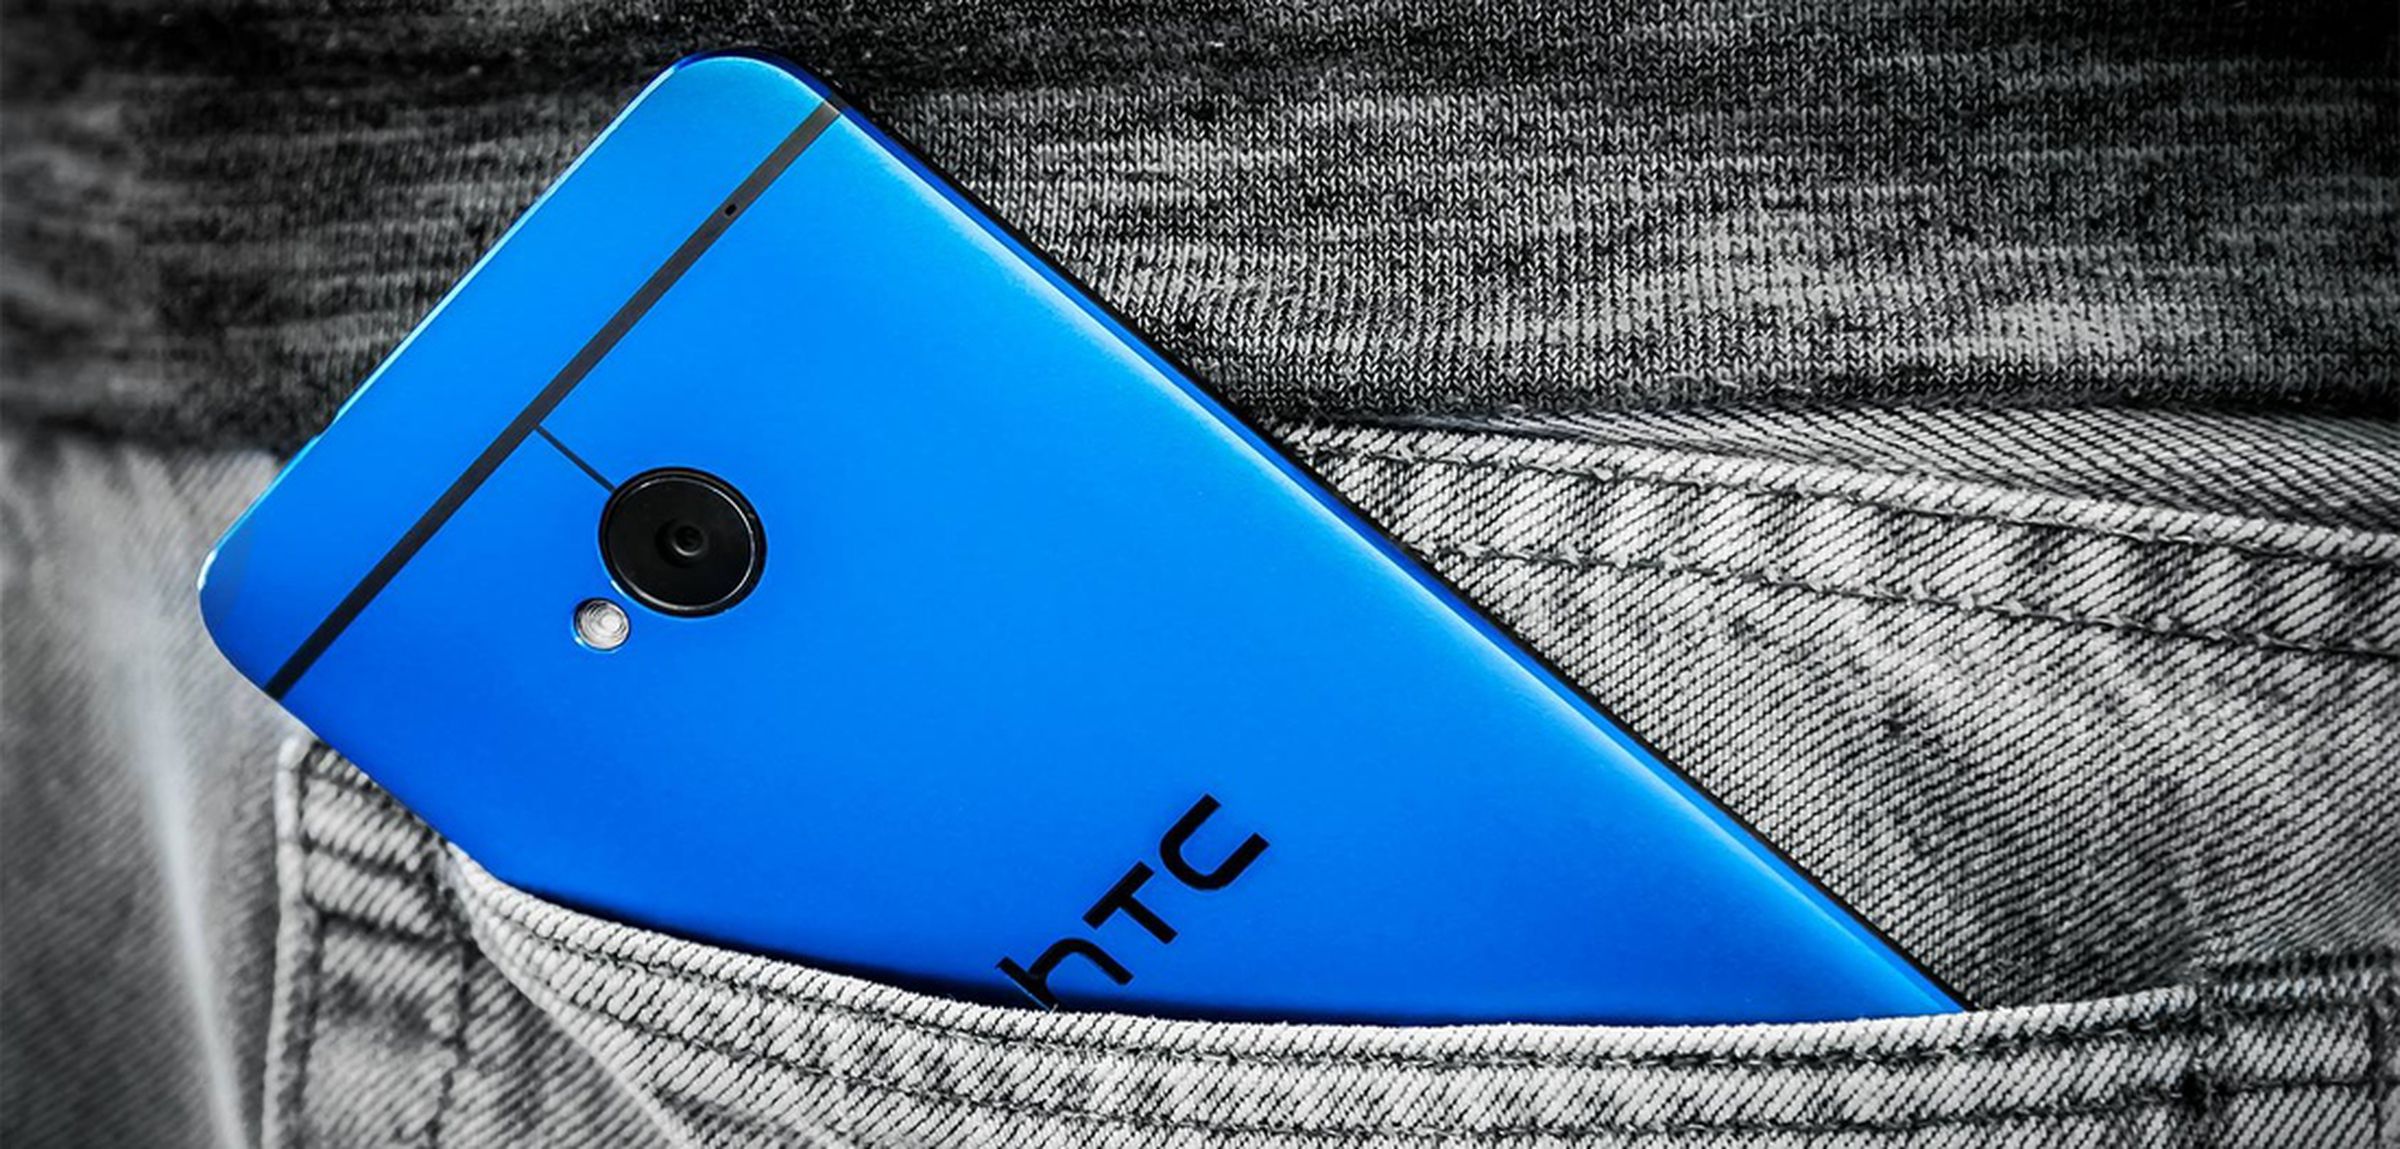 HTC One Metallic Blue photos